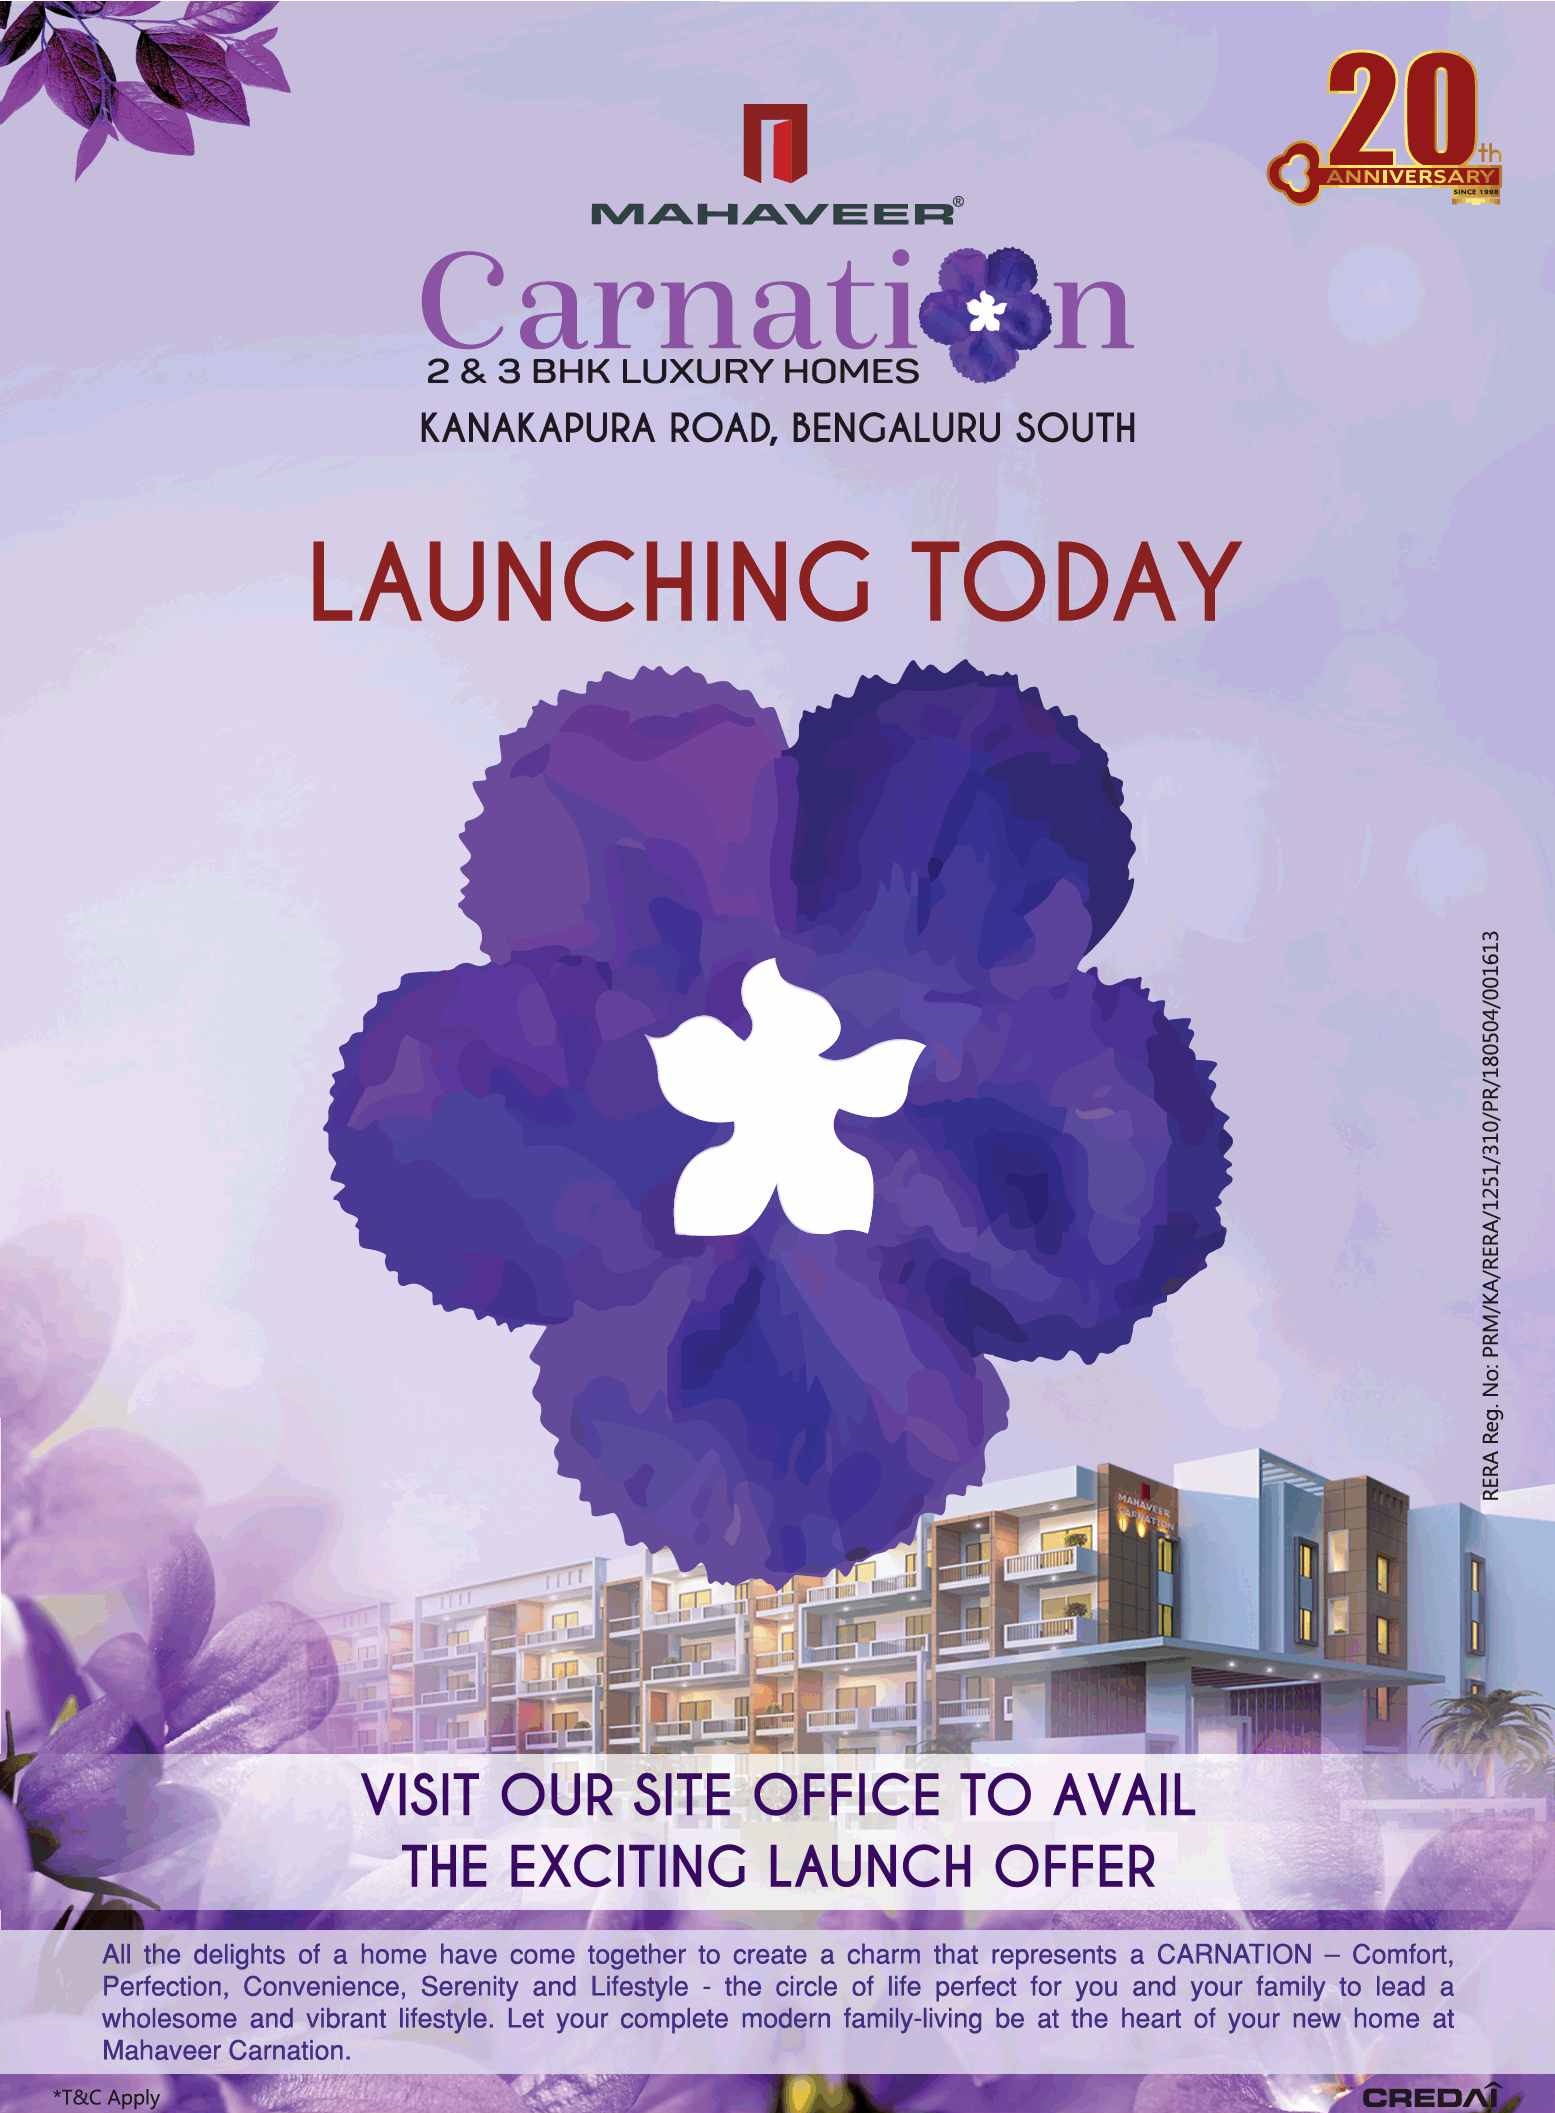 Book 2 & 3 BHK Luxury Homes at Mahaveer Carnation in Bangalore Update